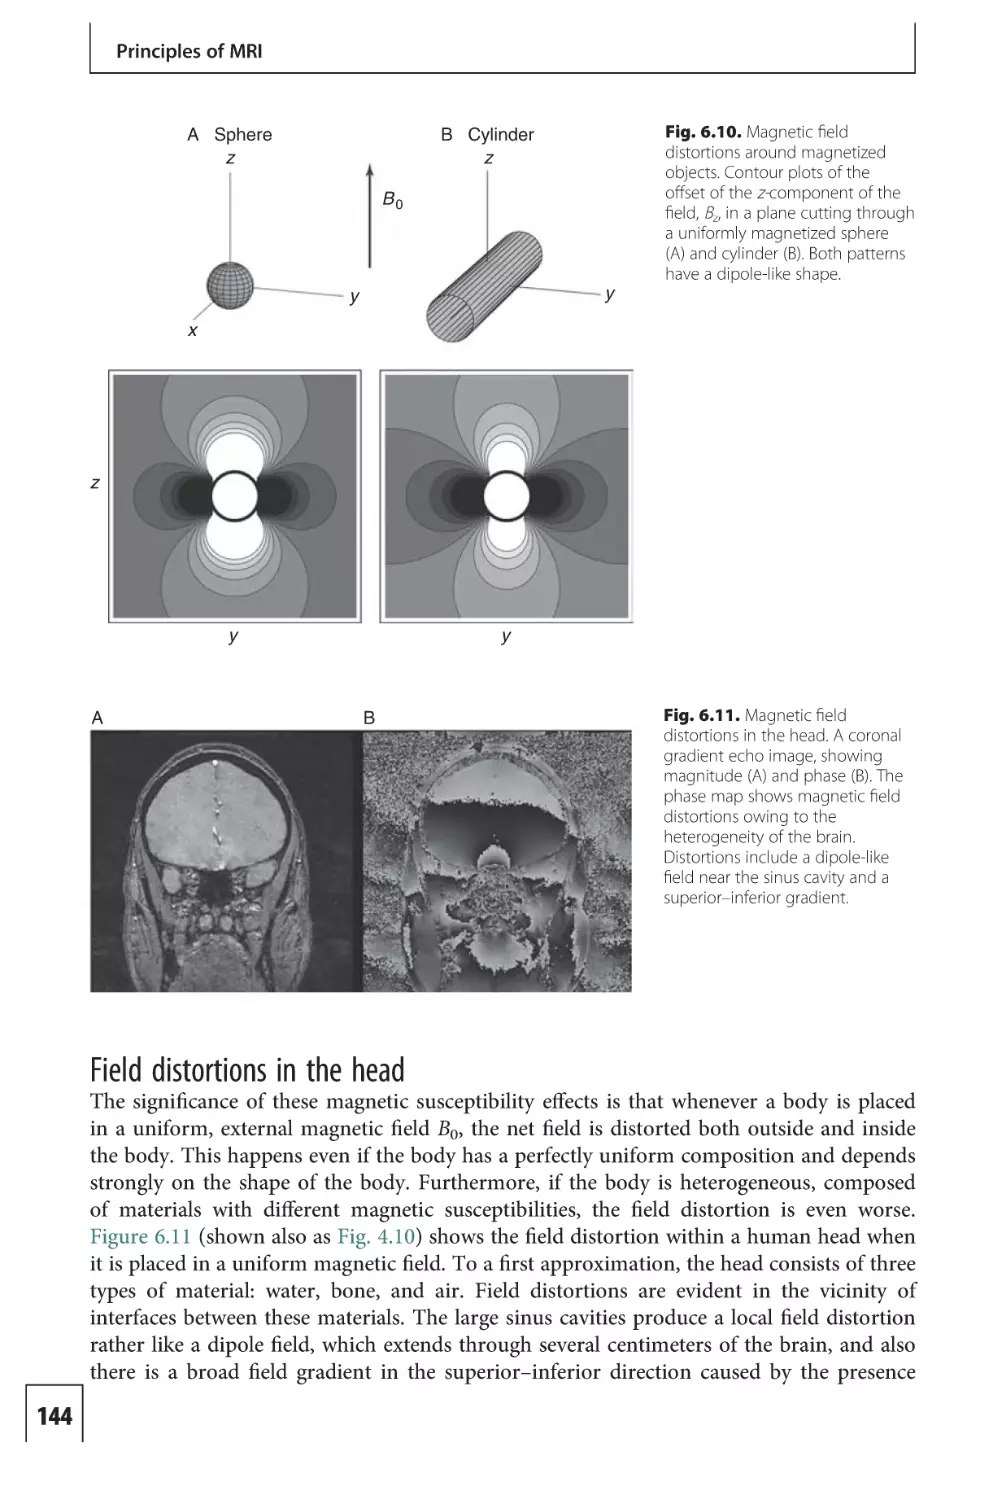 Field distortions in the head